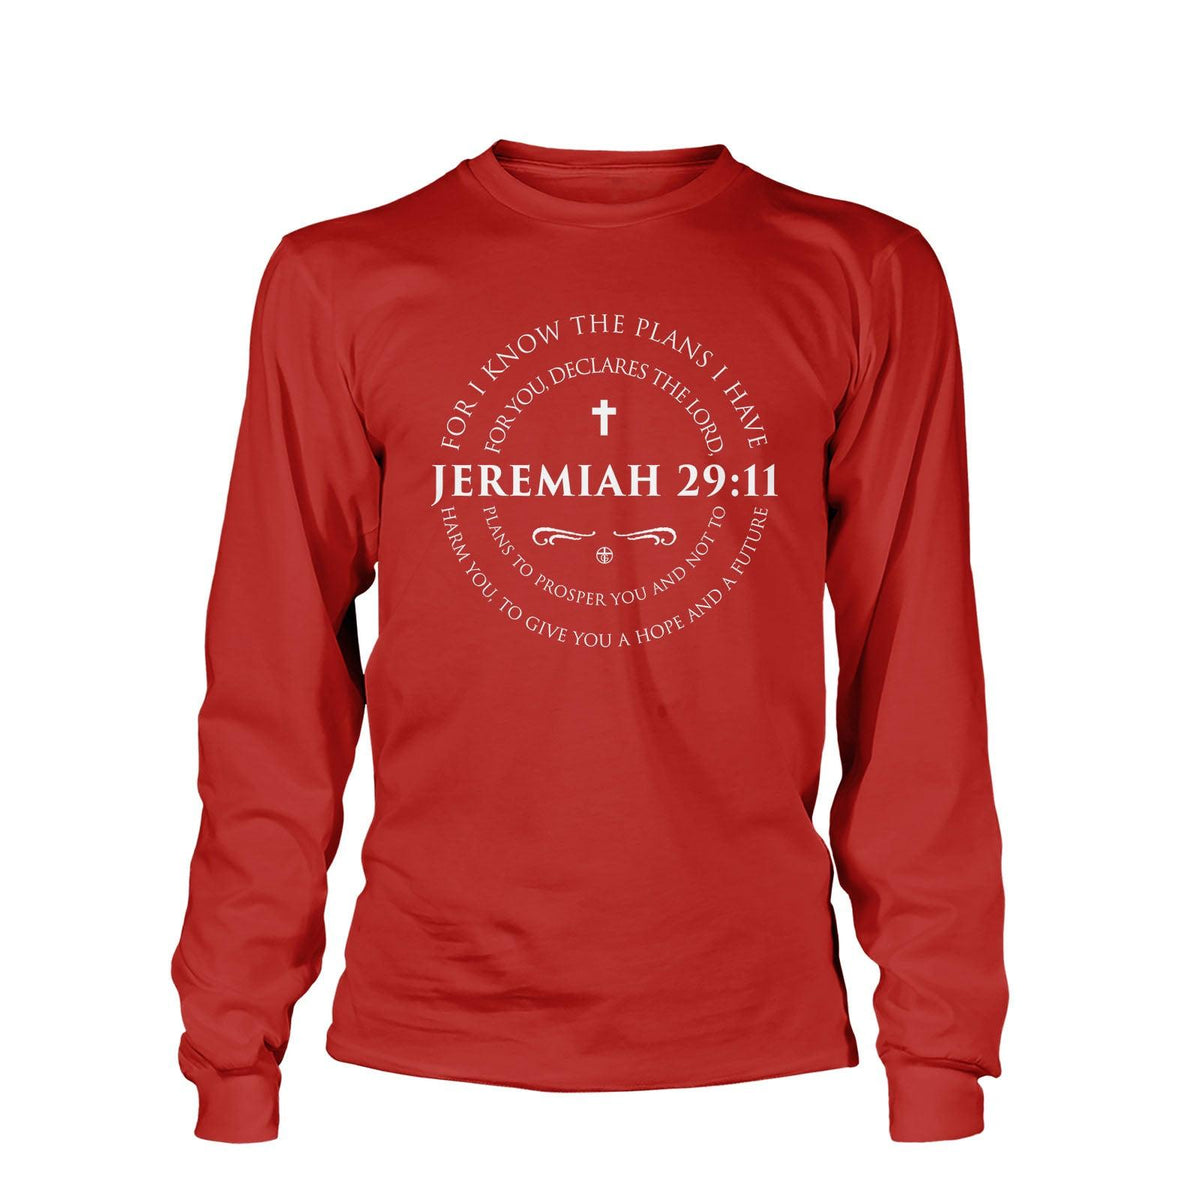 Jeremiah 29:11 Long Sleeve T-Shirt - Our True God